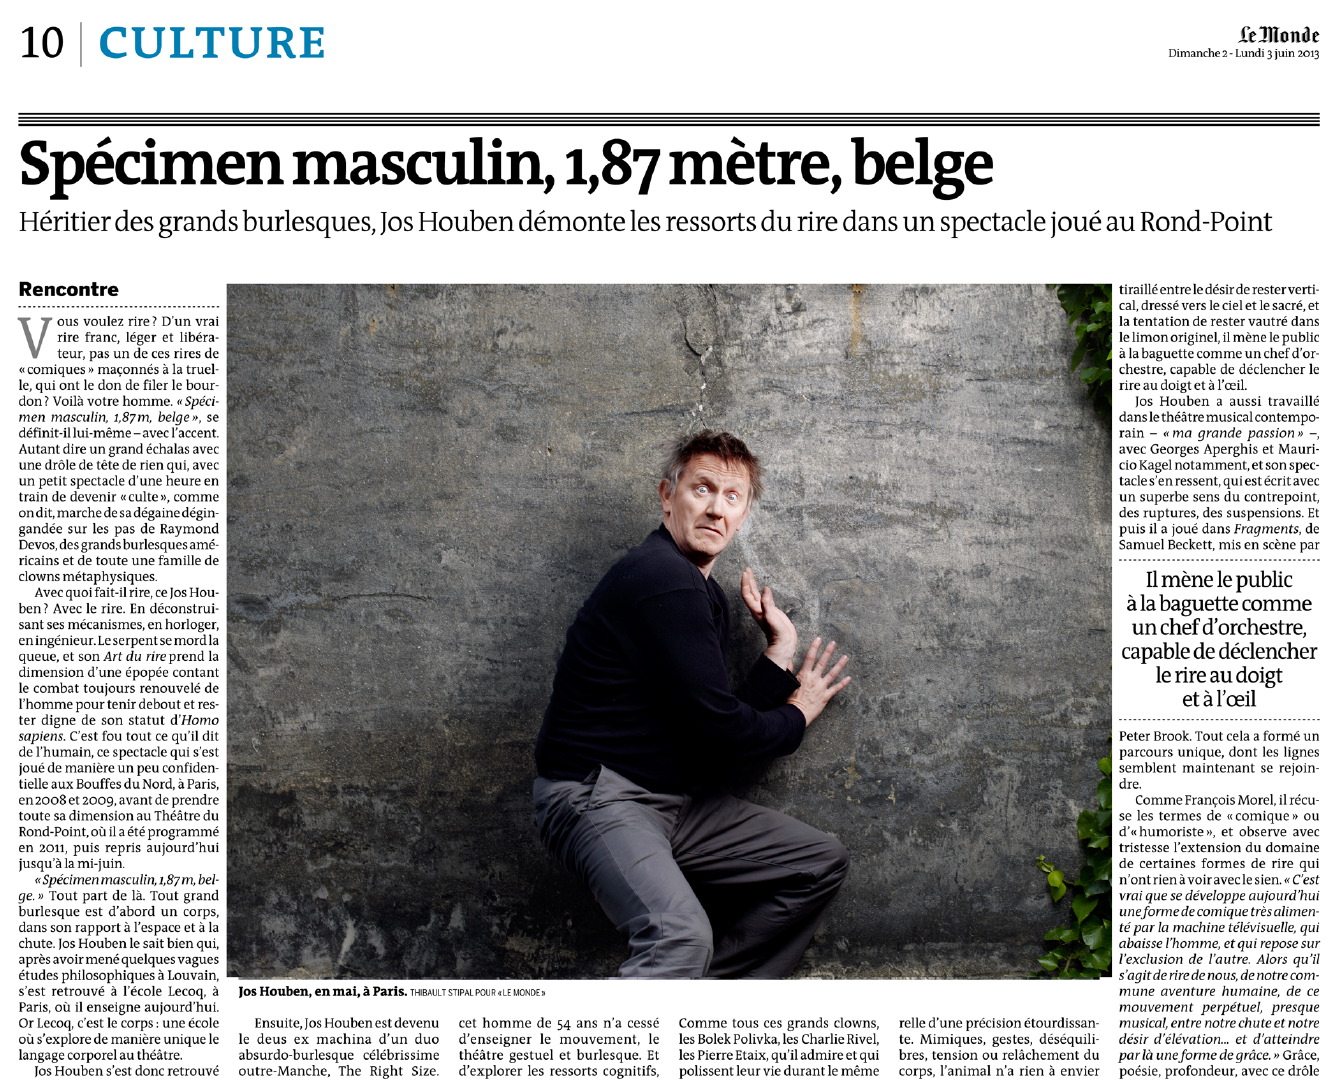 Thibault Stipal - Photographer - Jos Houben / Le Monde - 2